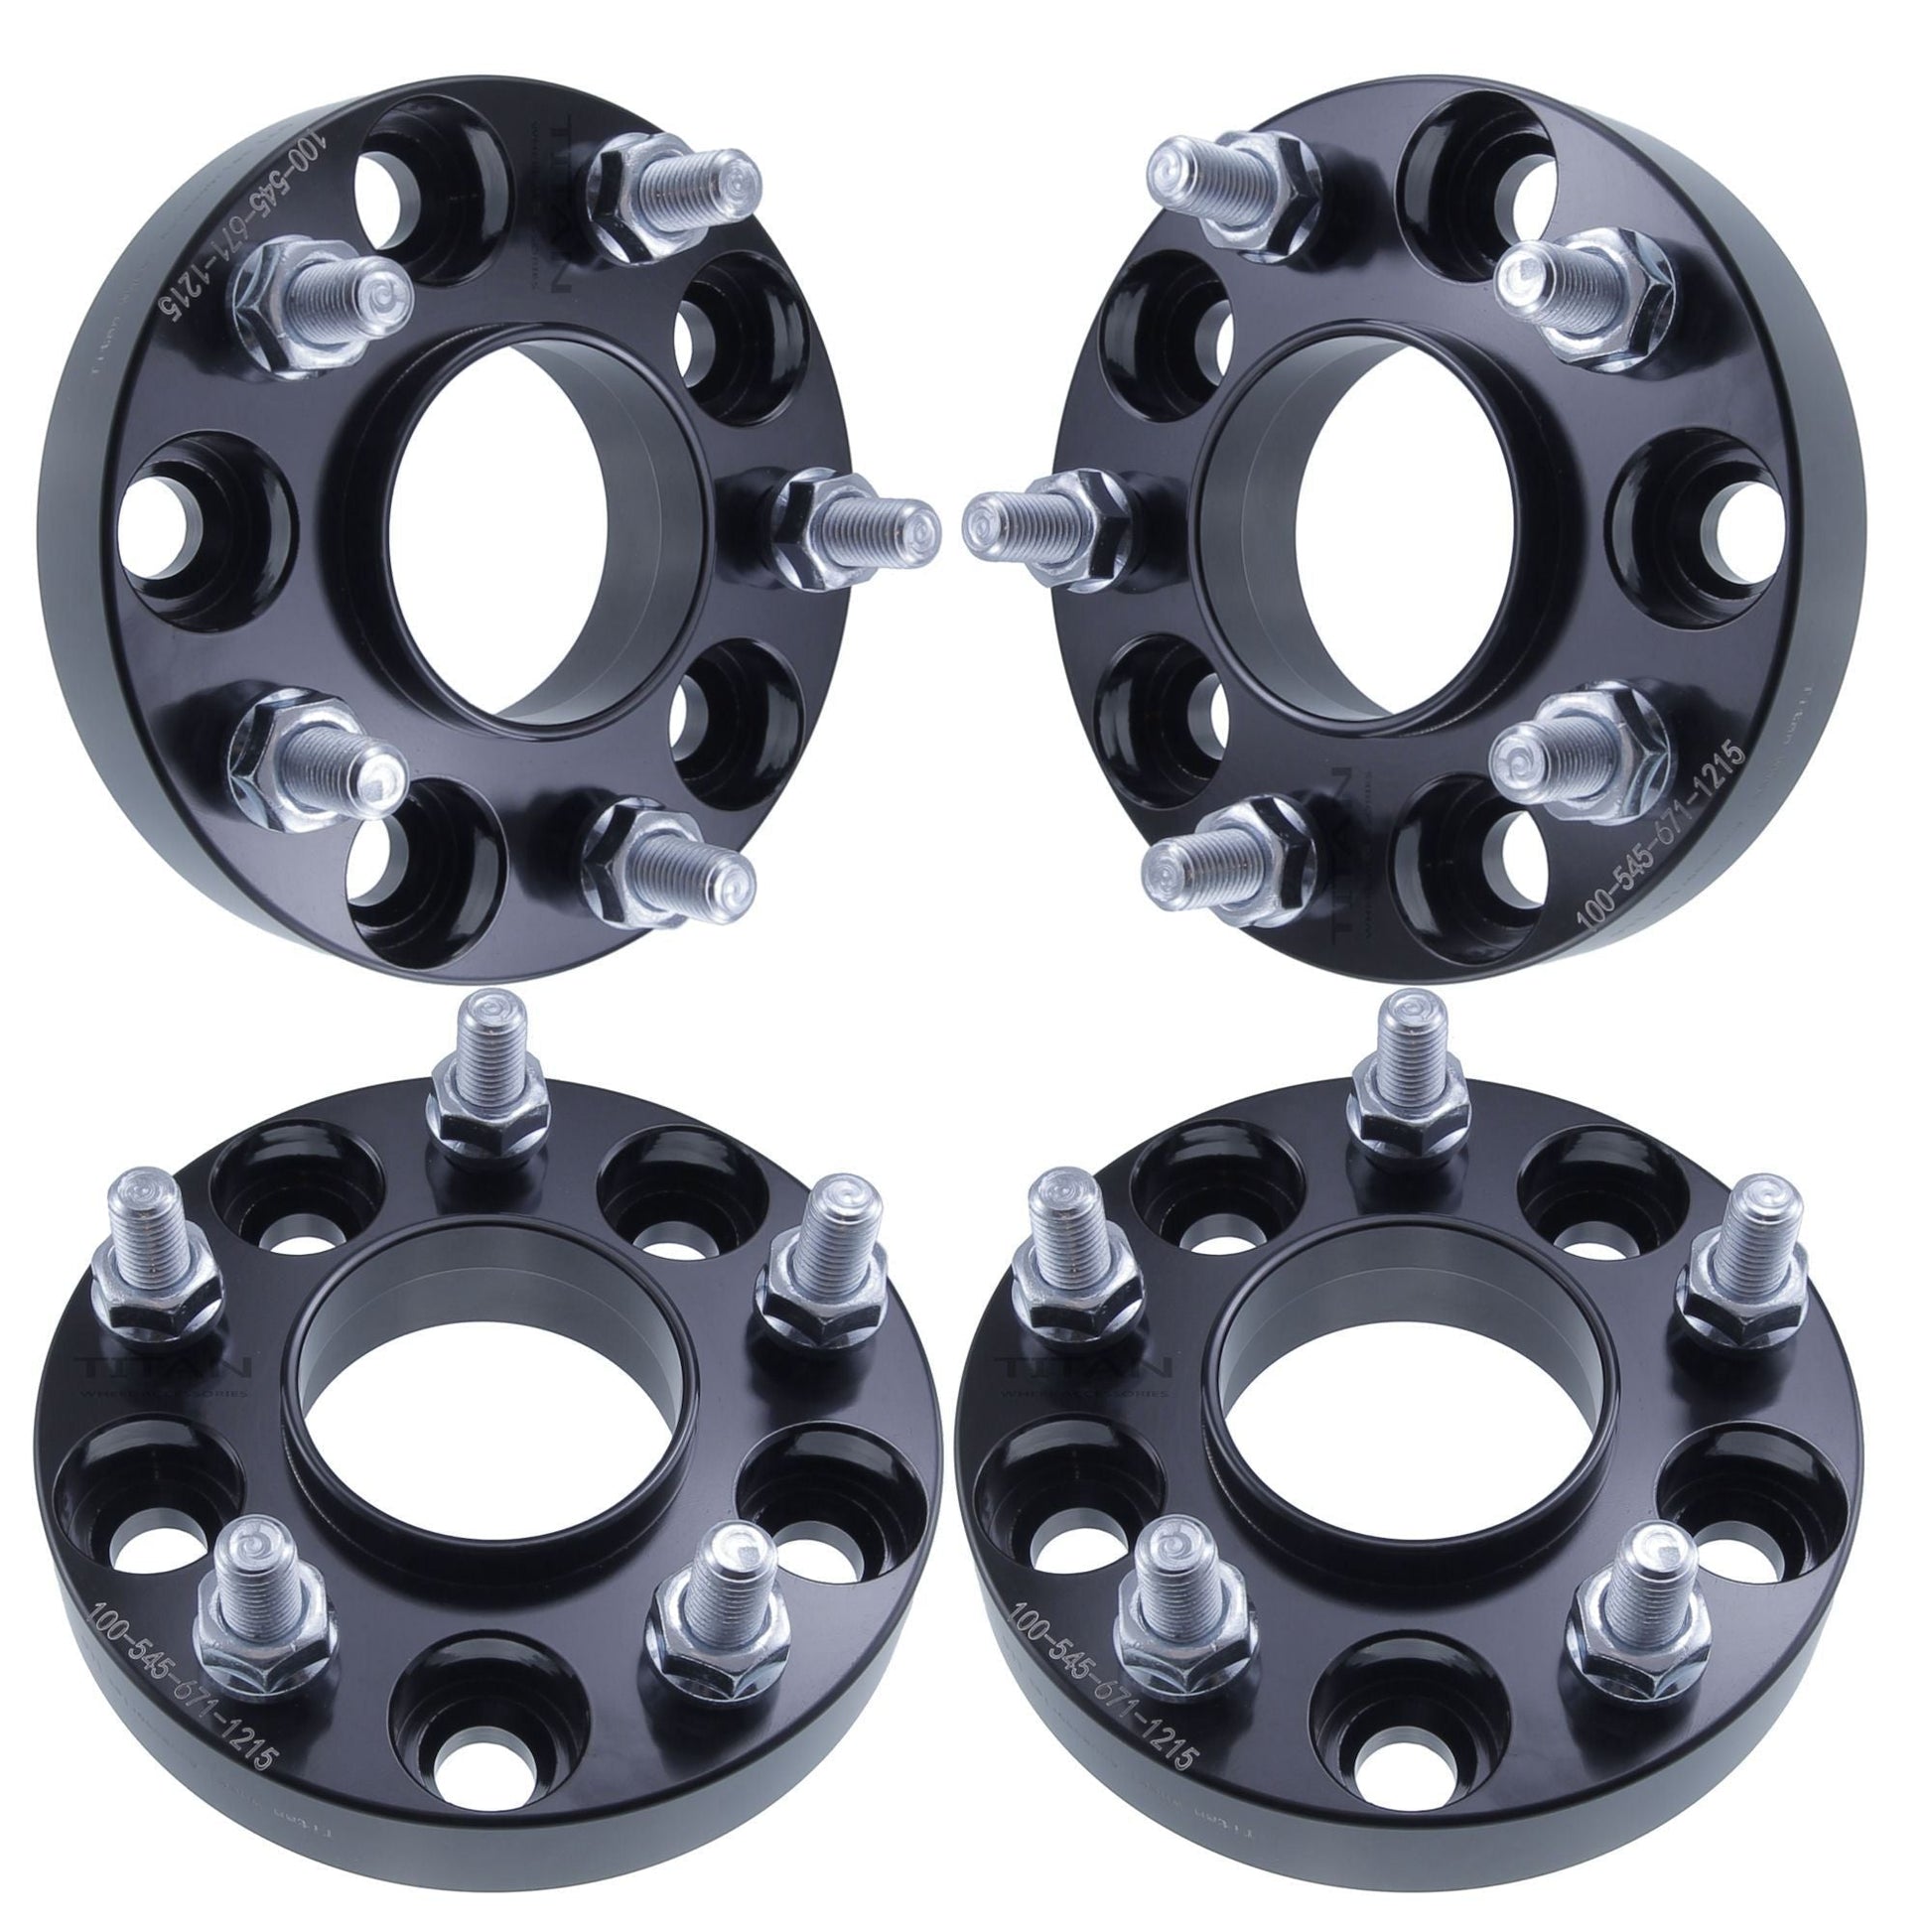 25mm (1") Titan Wheel Spacers for Mazda RX7 RX8 Miata | 5x114.3 | 67.1 Hubcentric | 12x1.5 Studs | Set of 4 | Titan Wheel Accessories